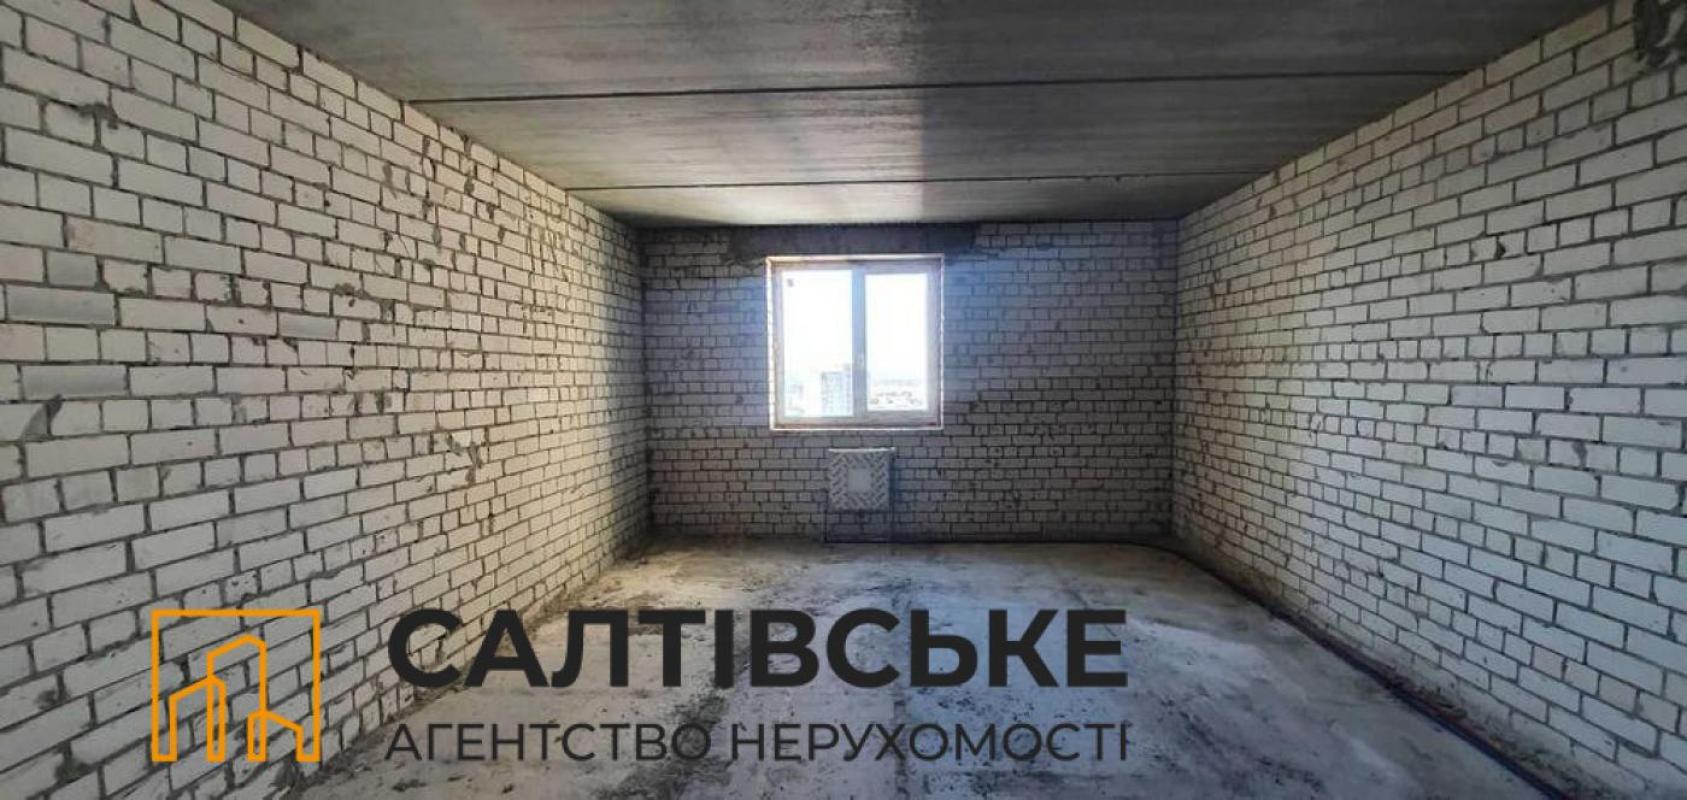 Sale 2 bedroom-(s) apartment 80 sq. m., Dzherelna Street 11